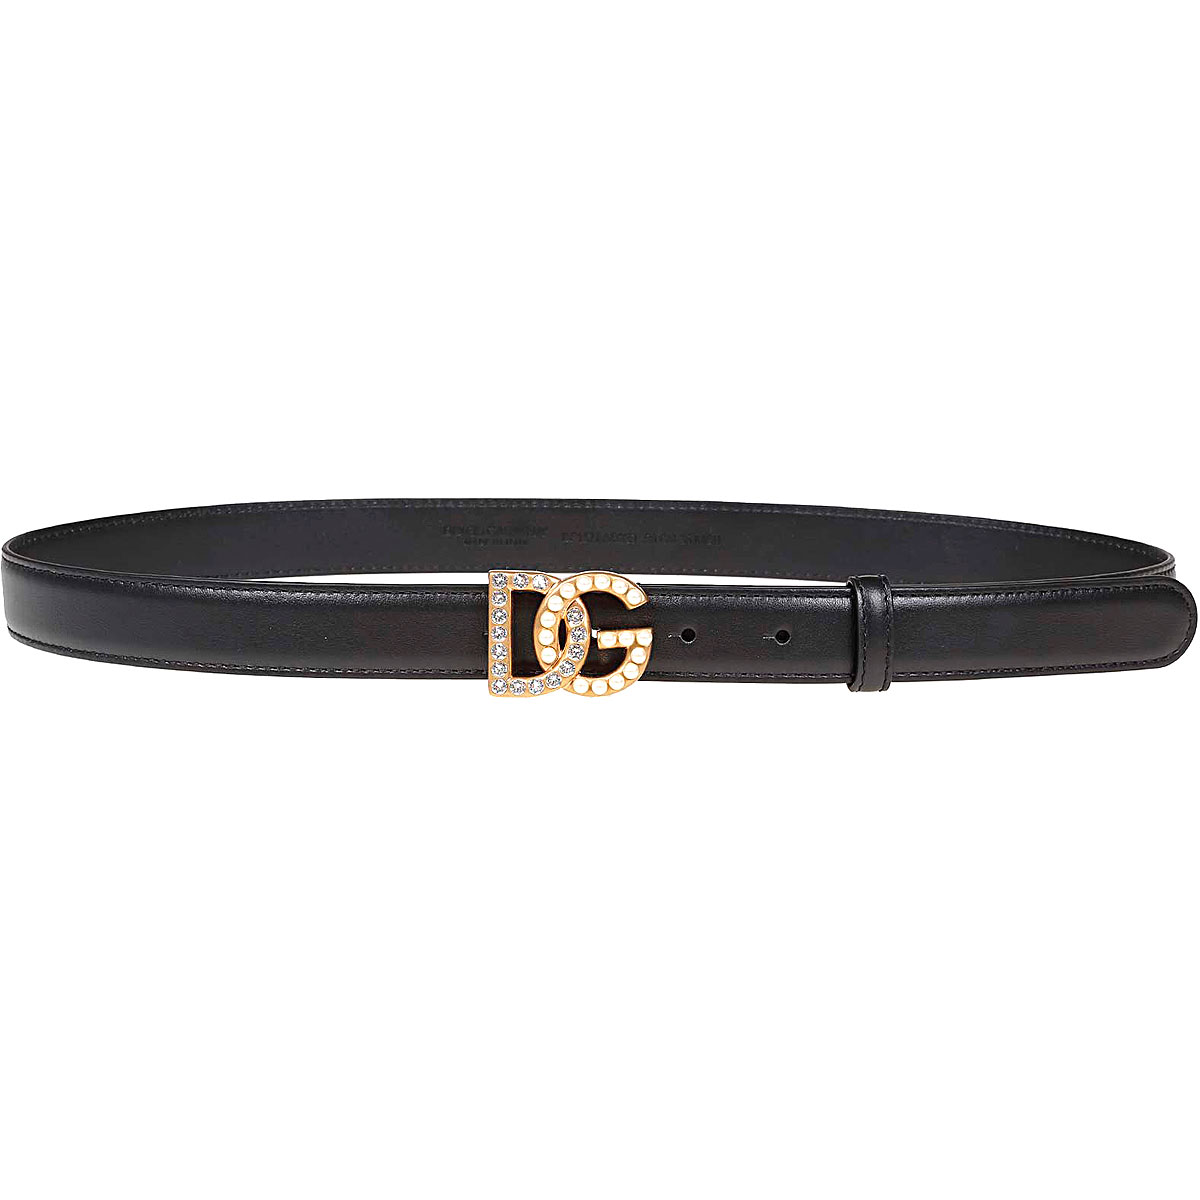 Womens Belts Dolce & Gabbana, Style code: be1577-aq339-8s574